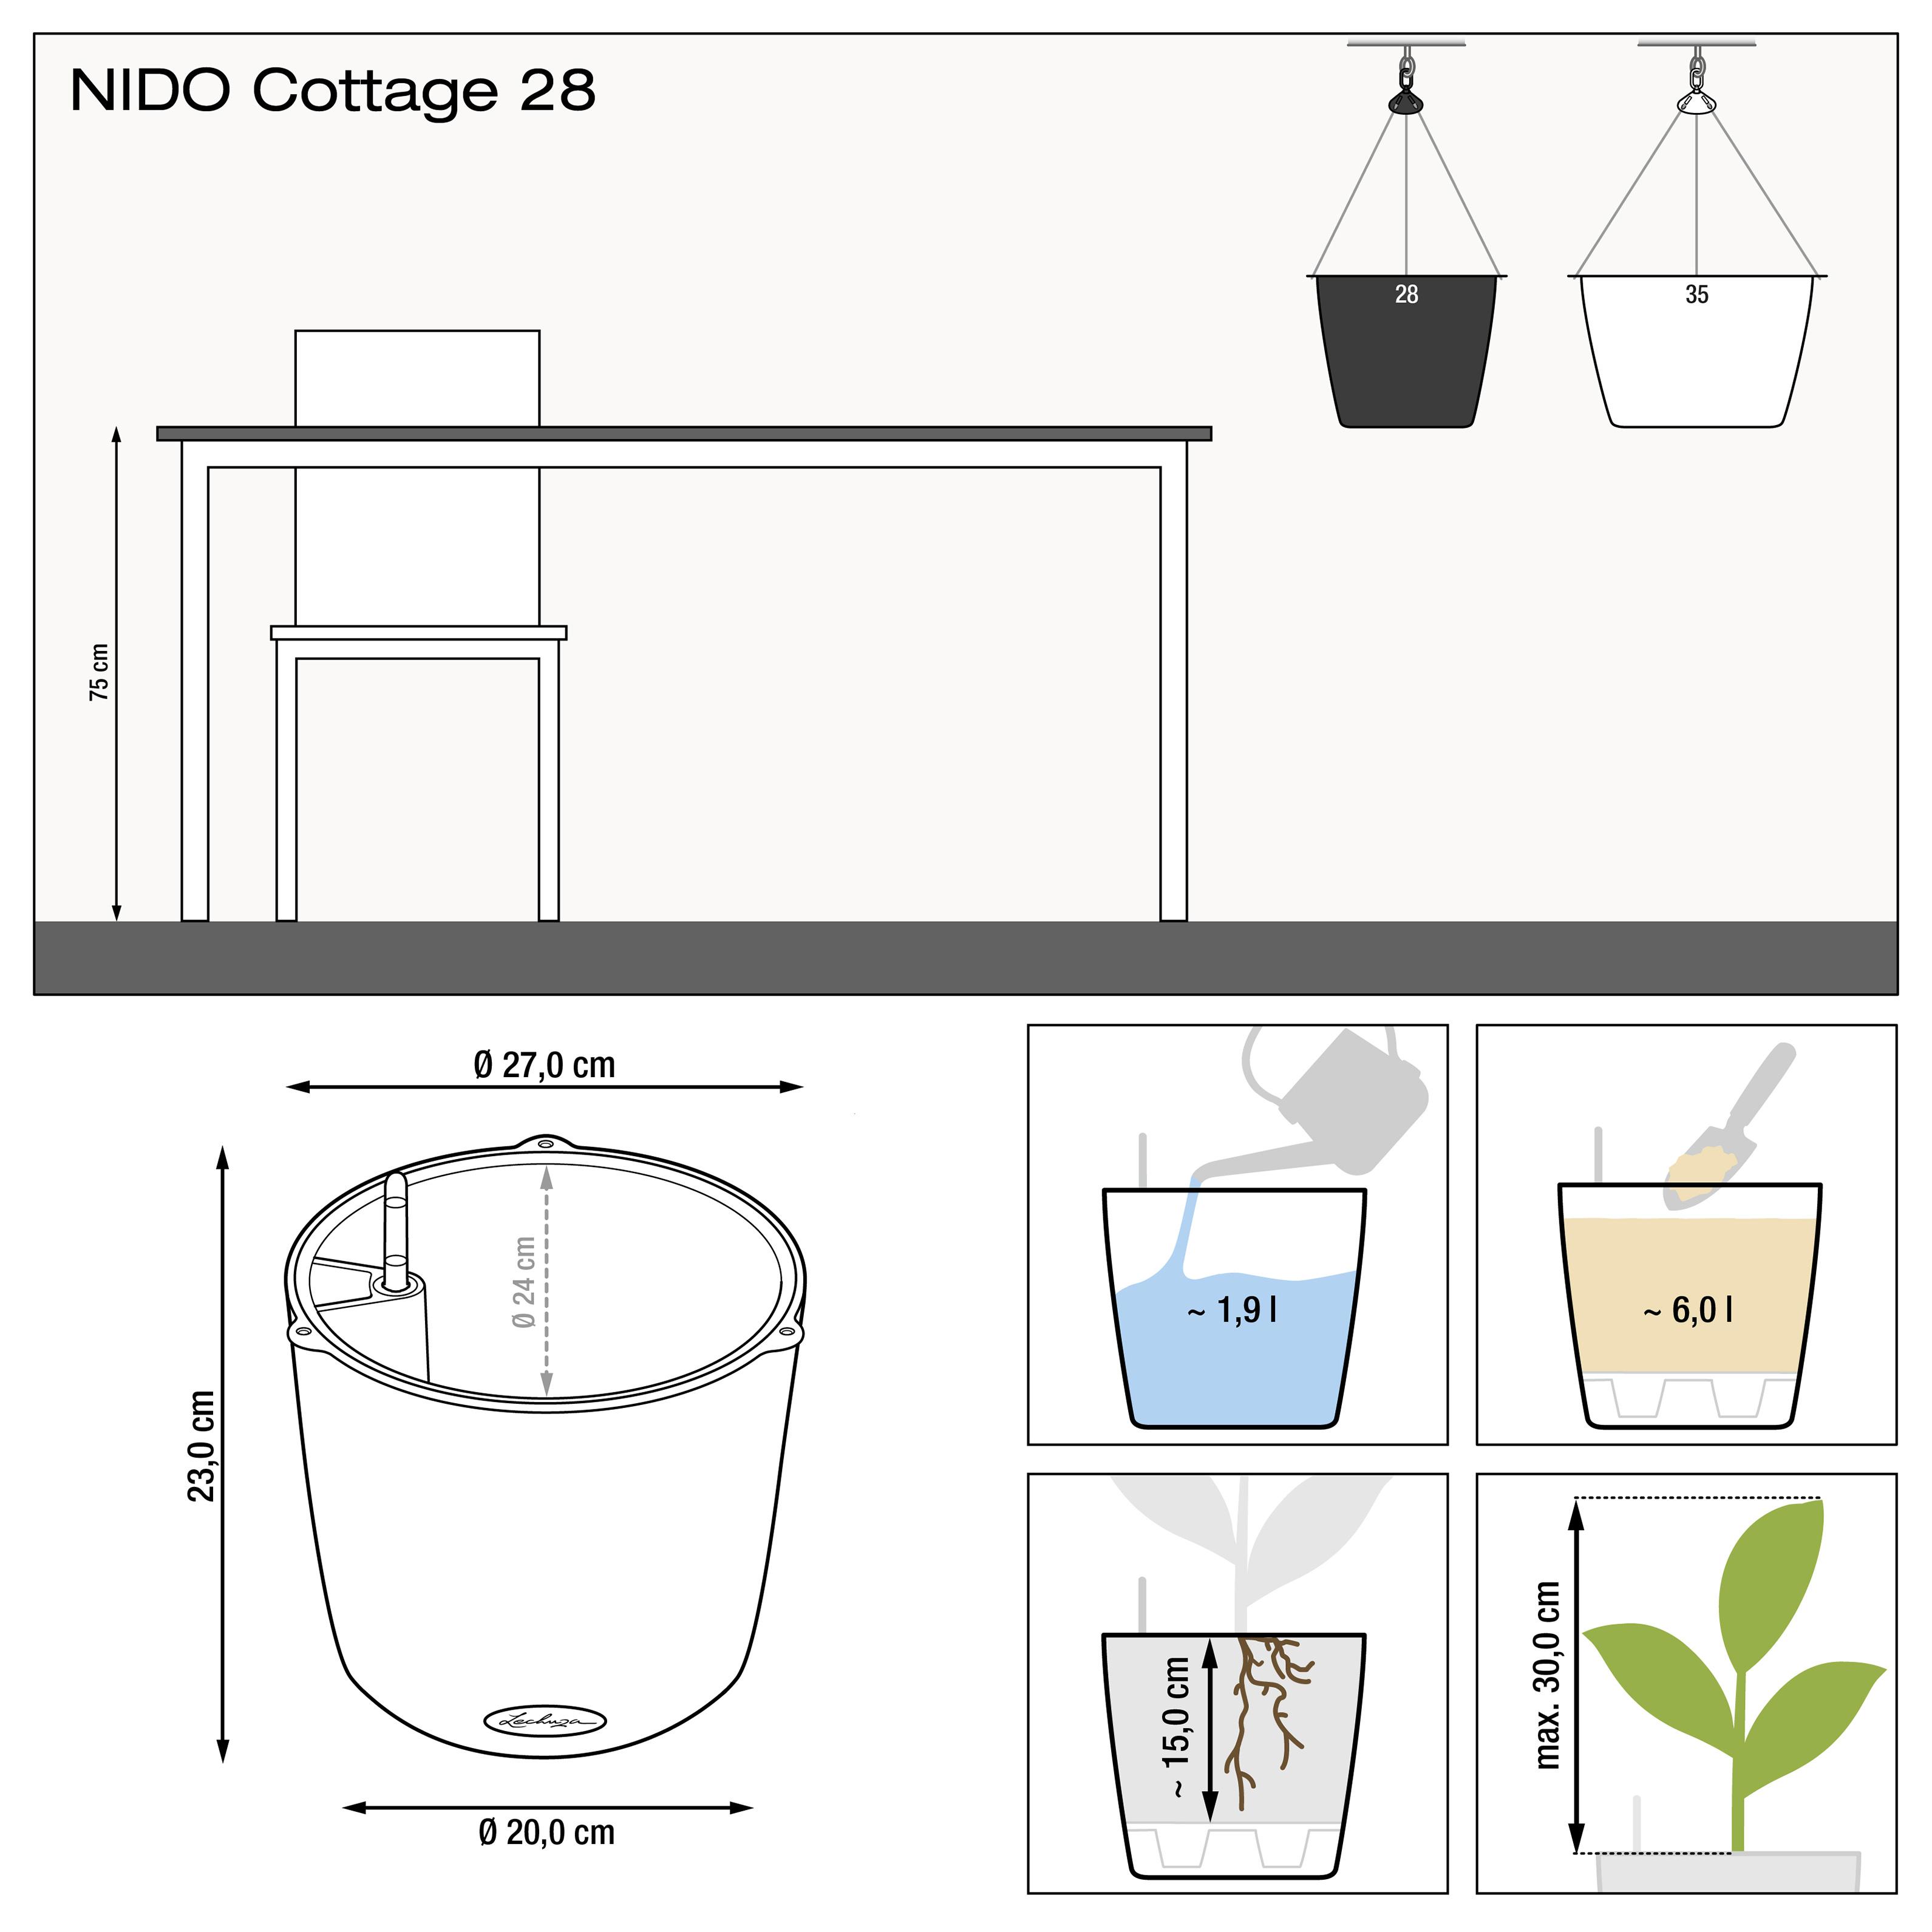 le_nido-cottage28_product_addi_nz Thumb